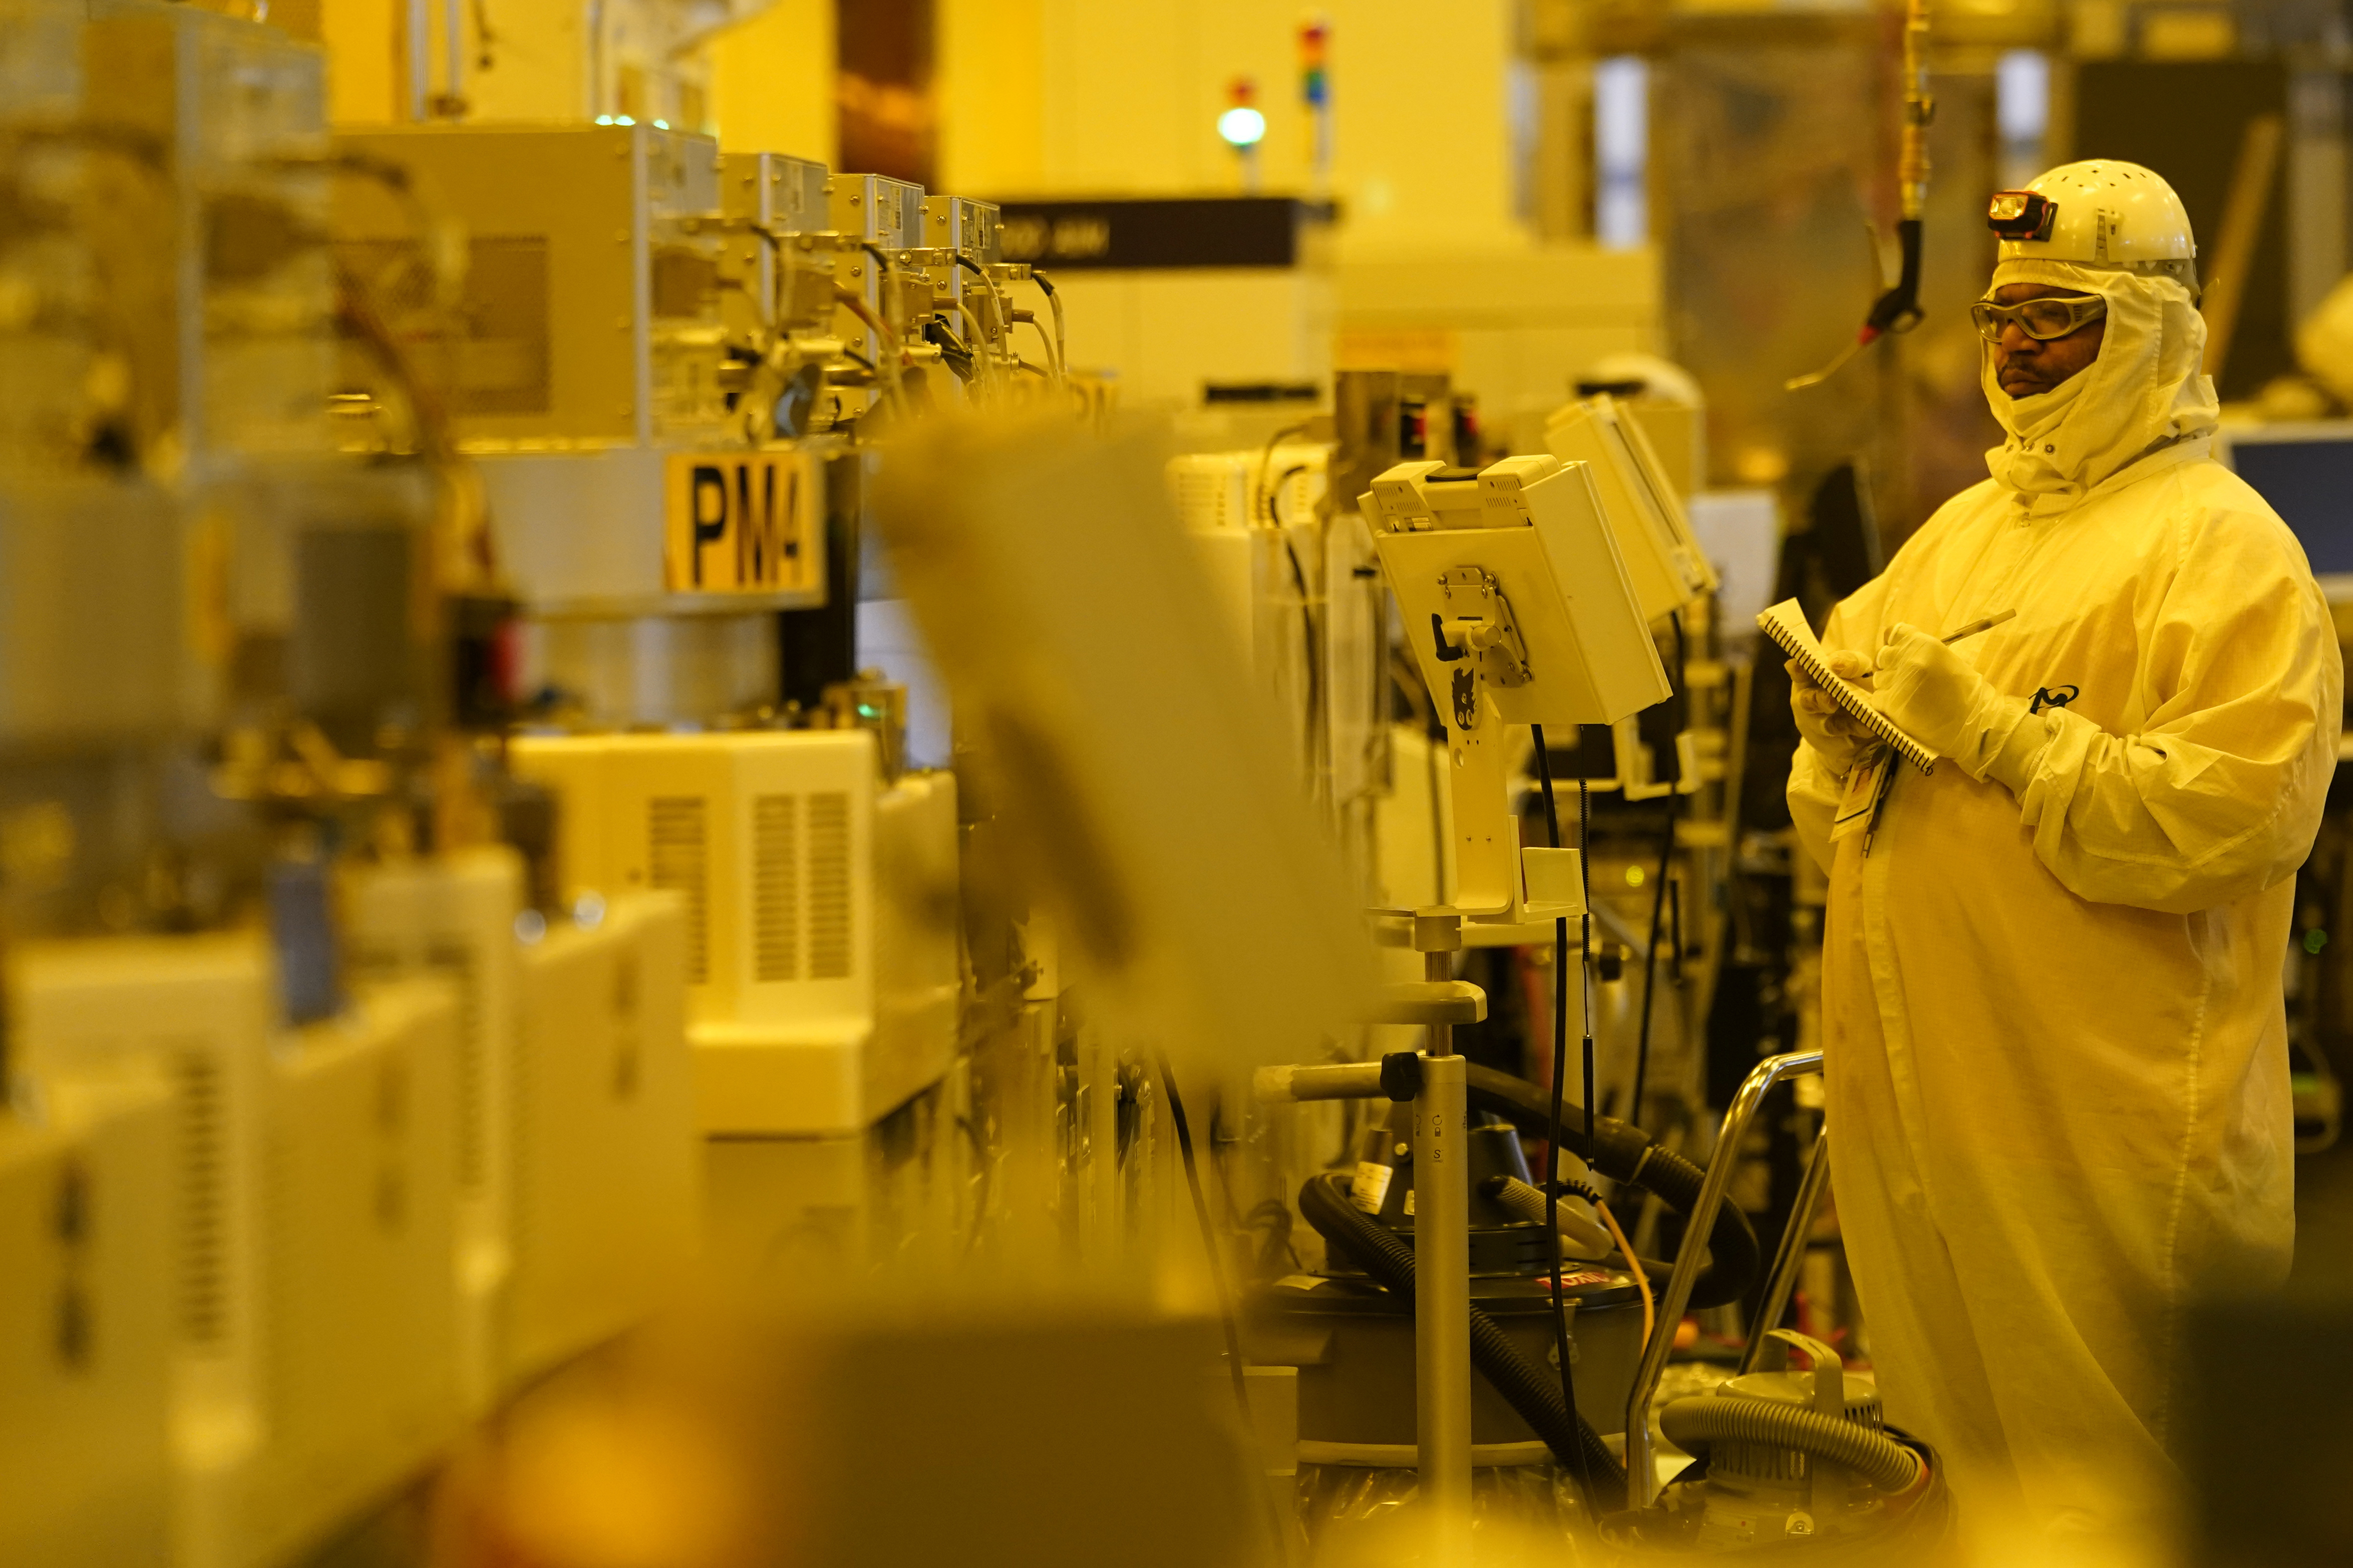 Micron chooses Boise for $15 billion chip factory